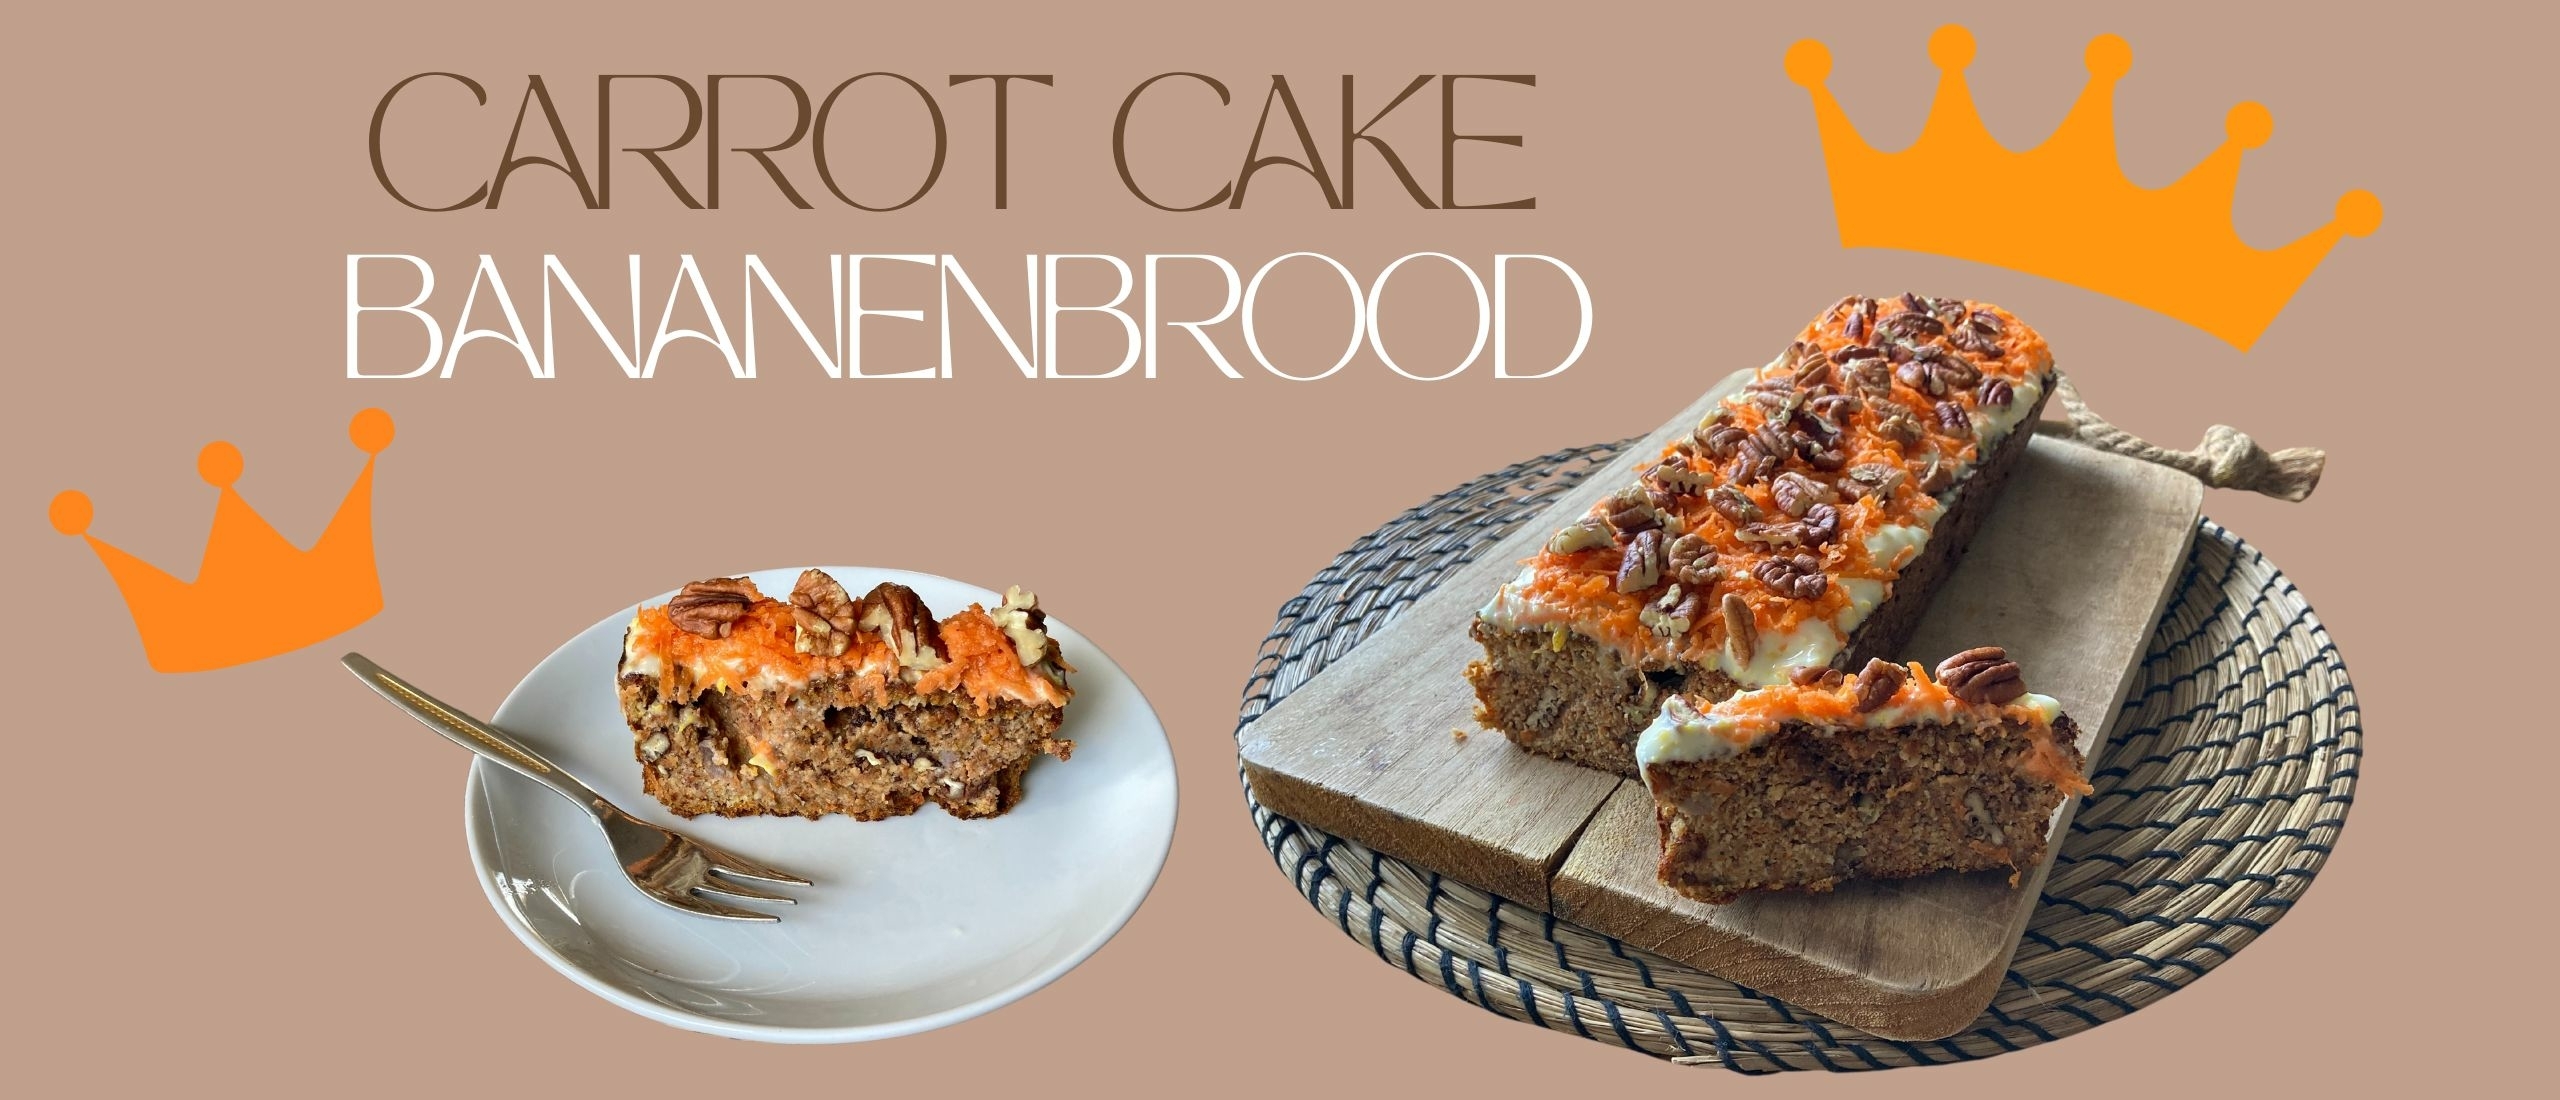 Carrot cake bananenbrood